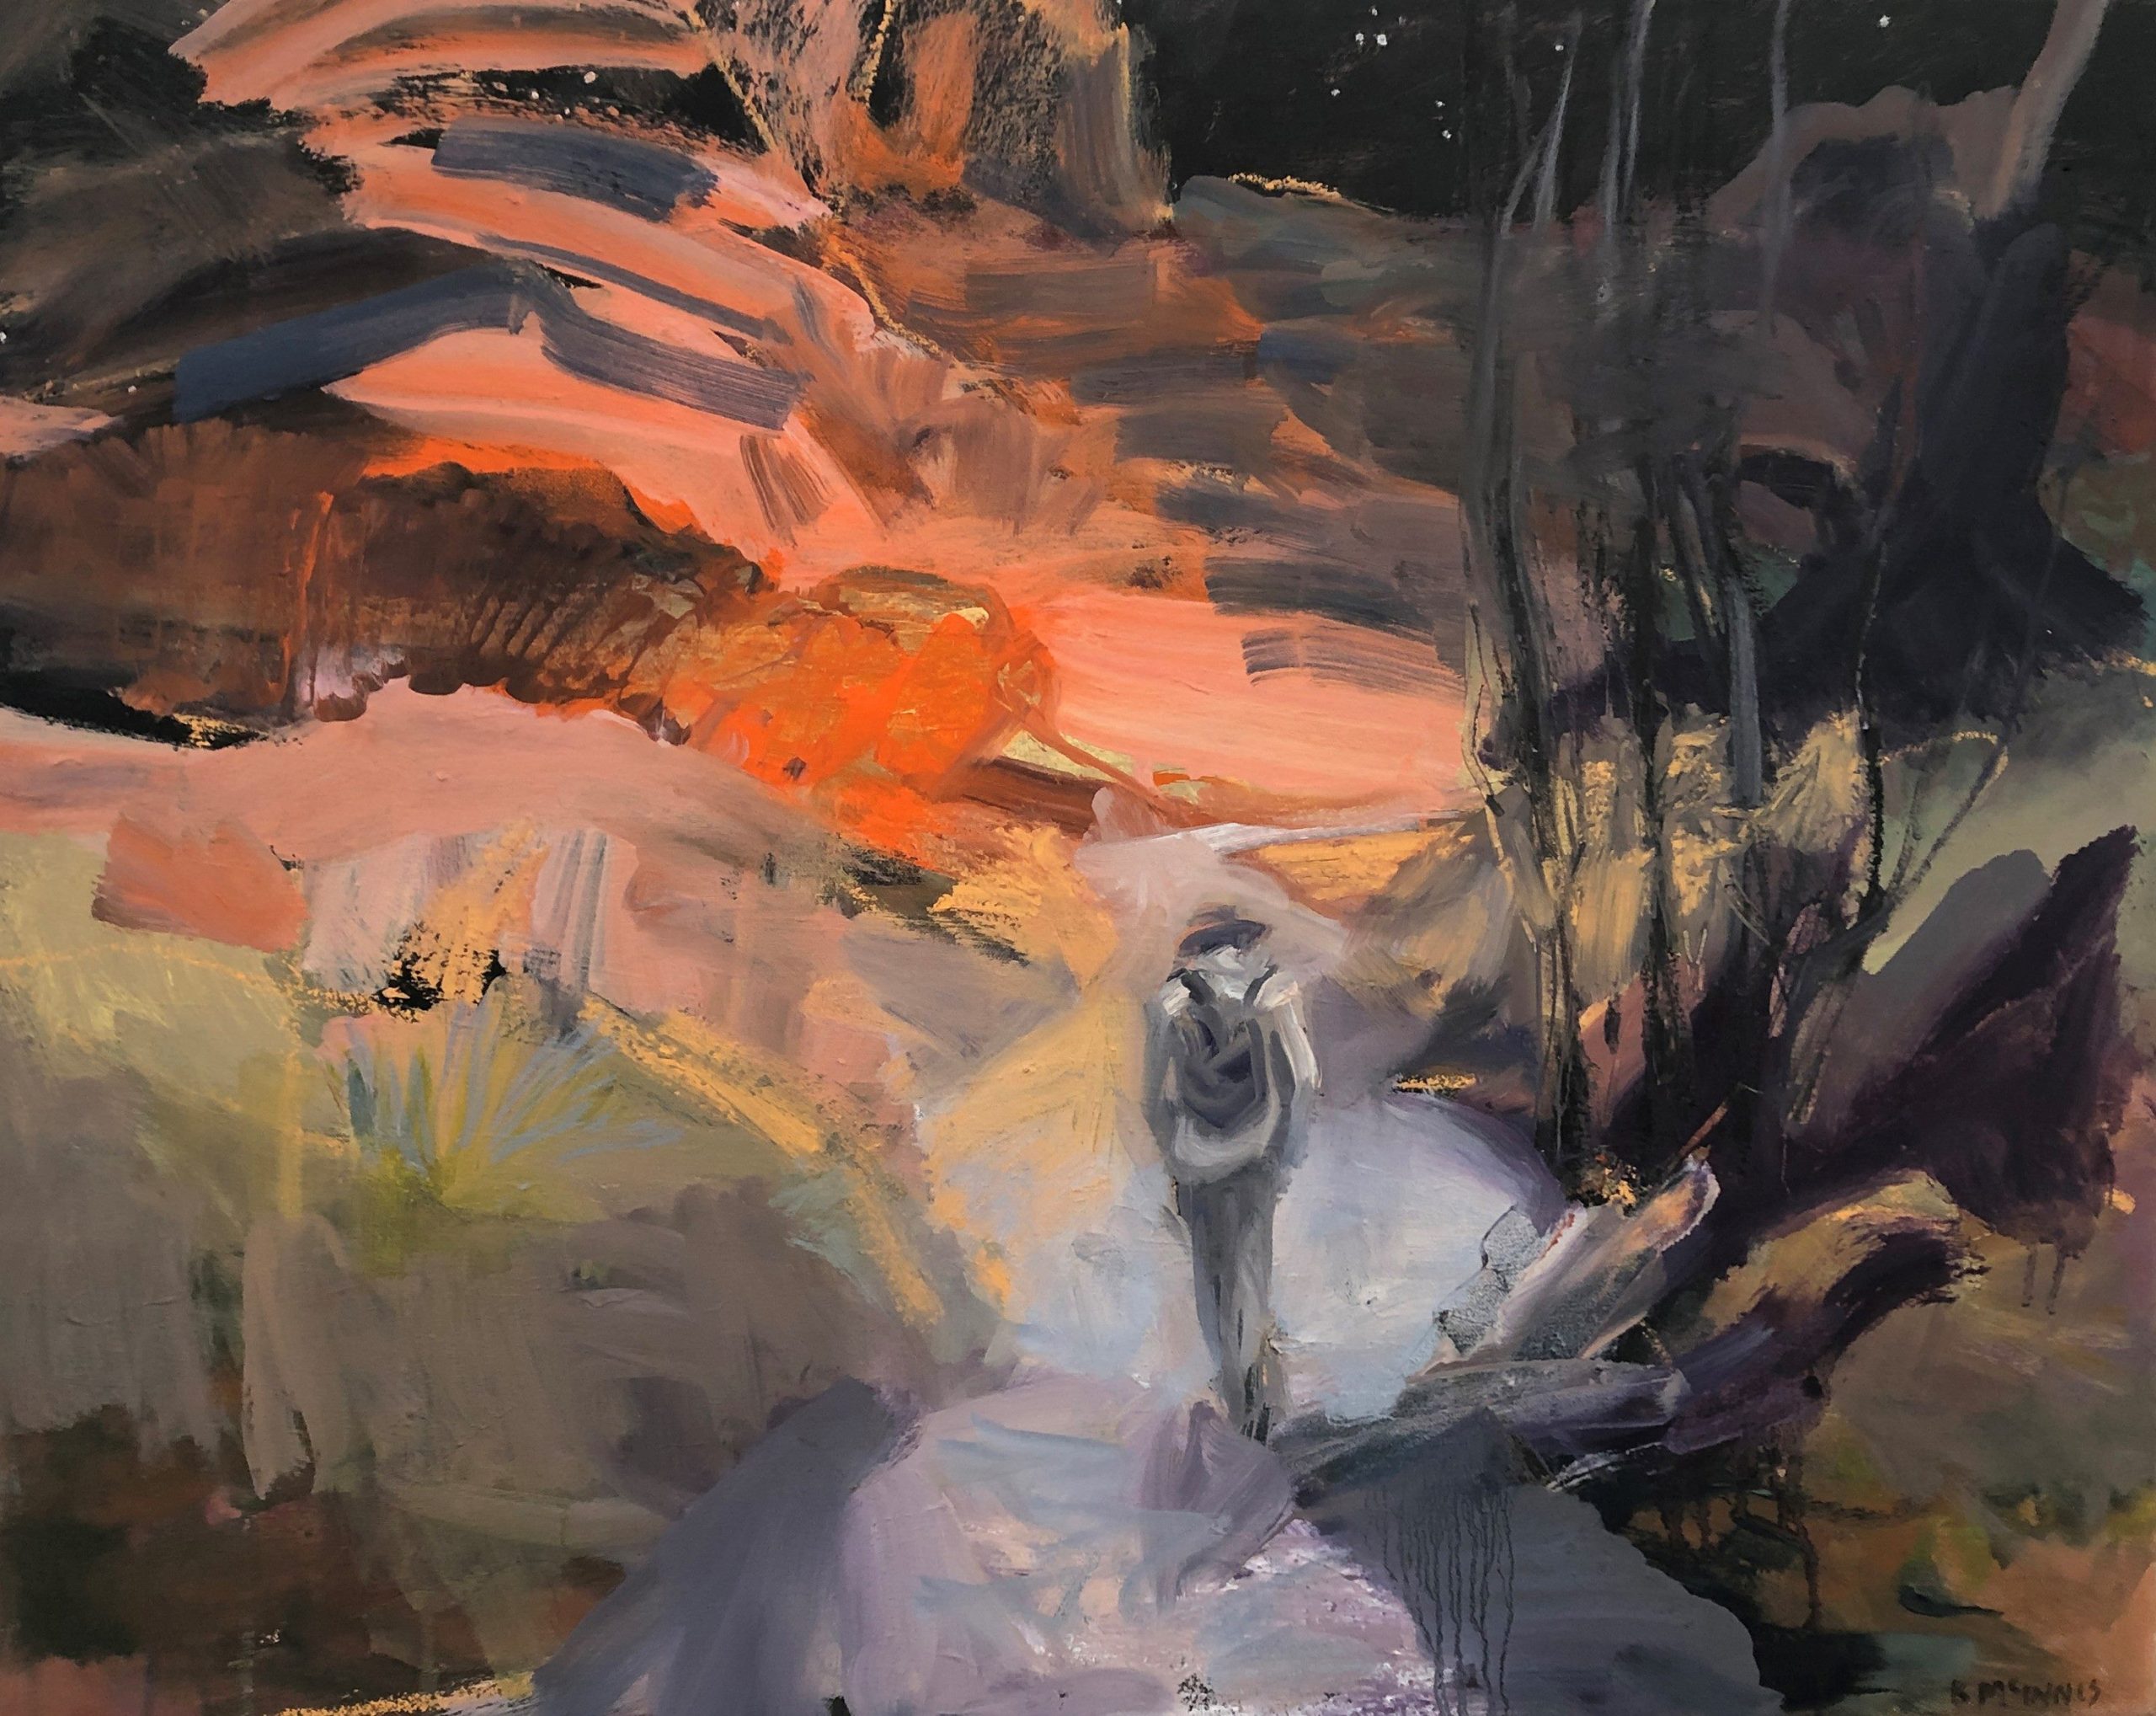 Kerry McInnis 'Nightwalker' oil on canvas 64 x 79cm $4,800